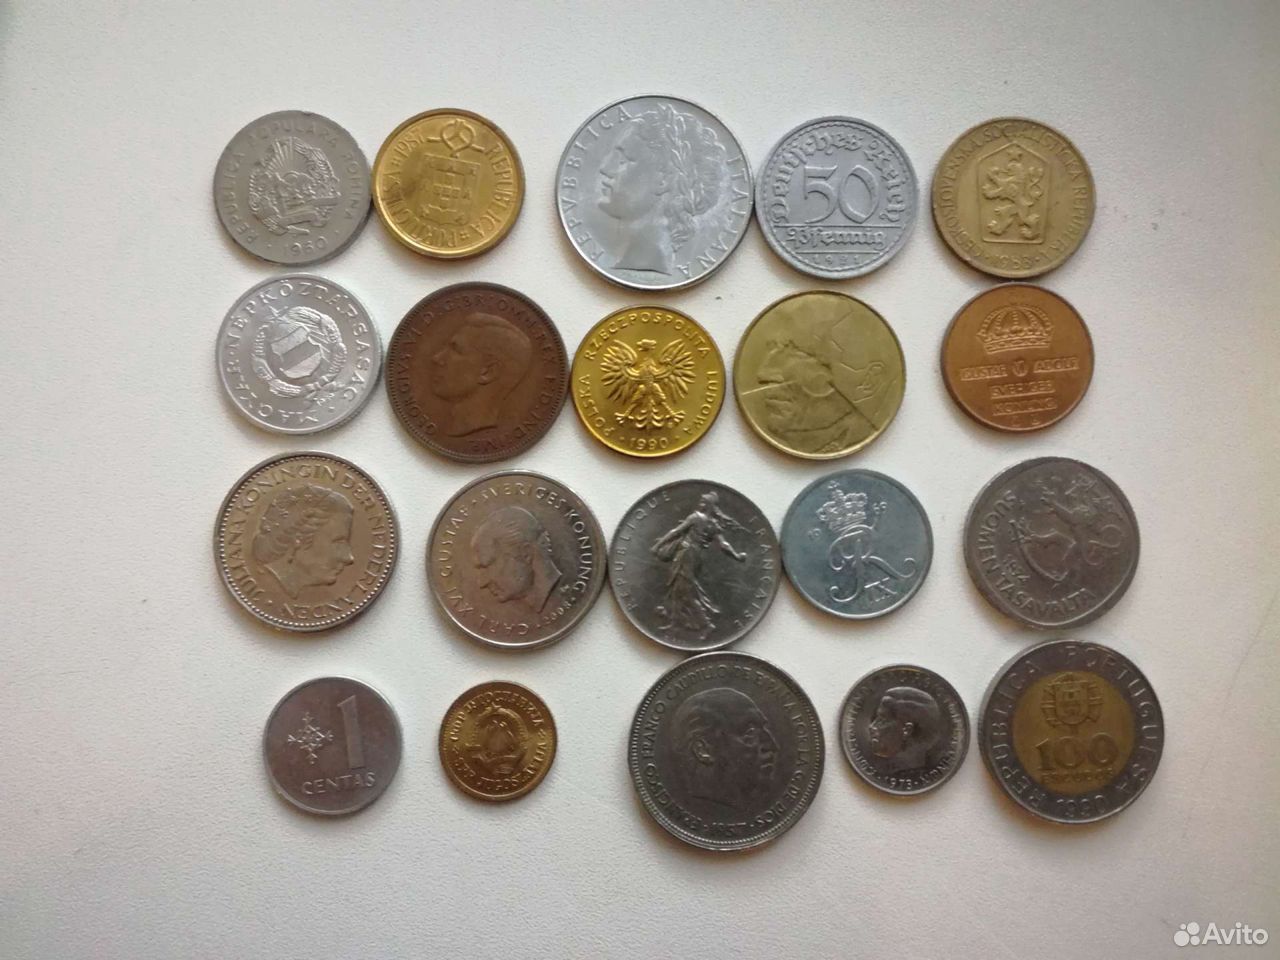  Münzen 